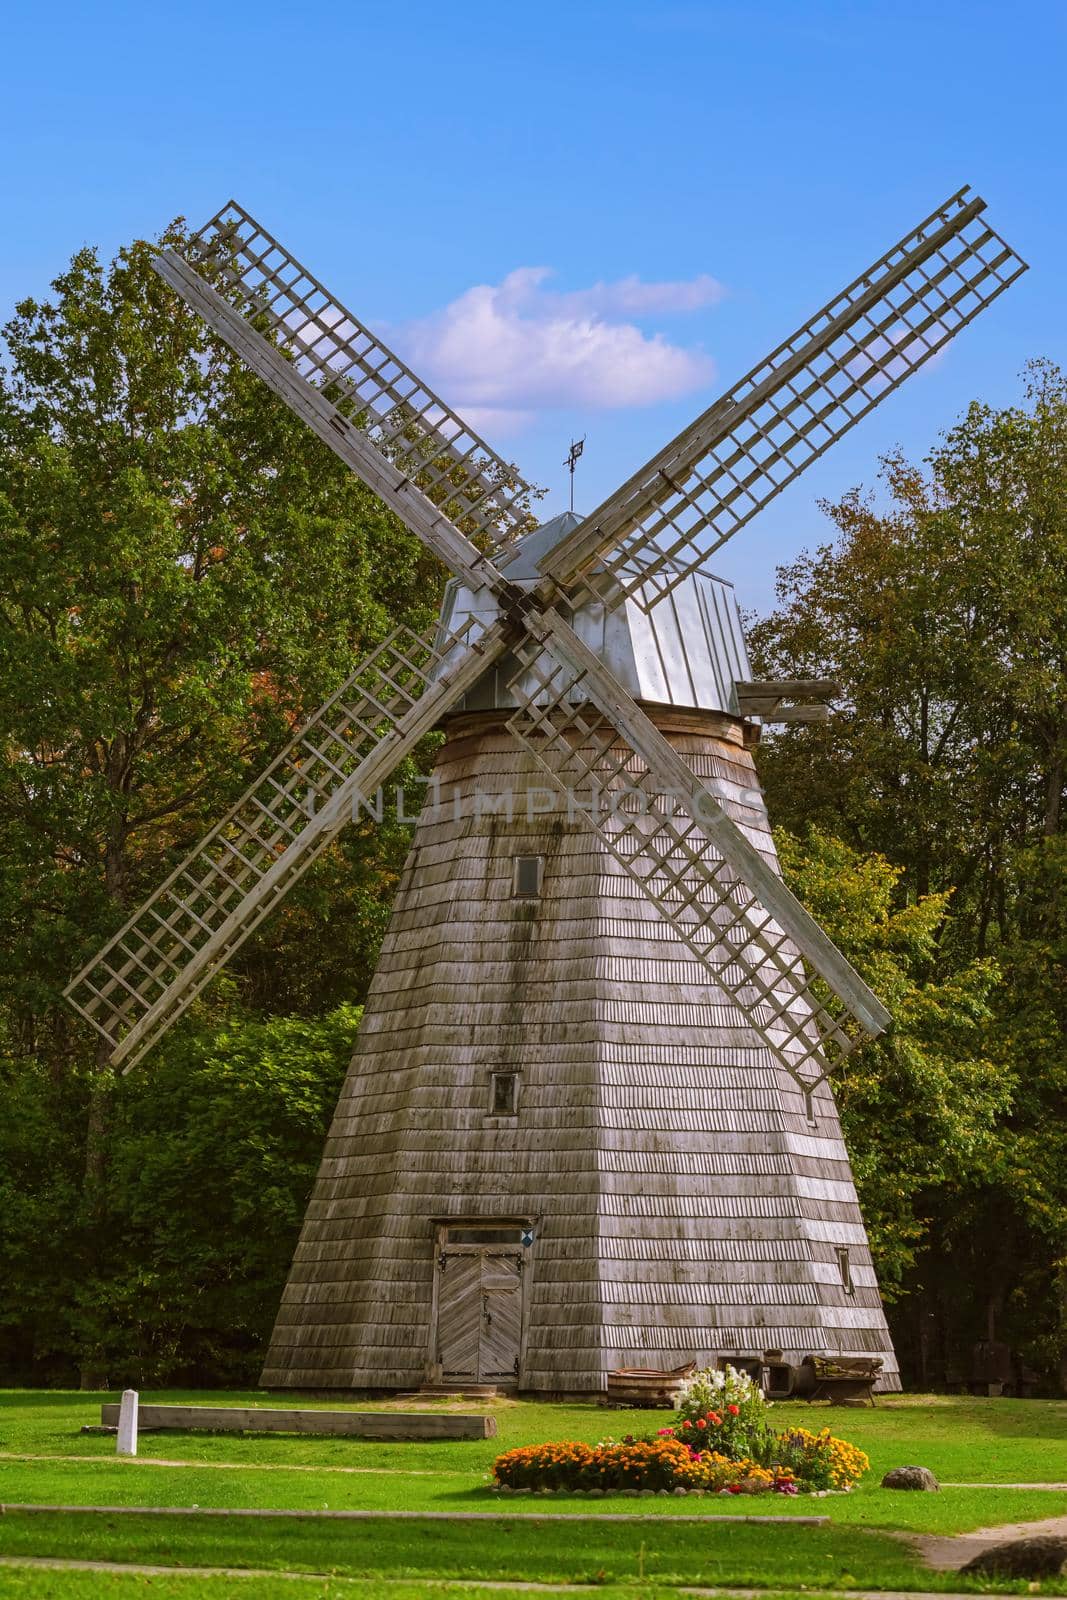 Rural scene in Latvia - Old wooden windmill